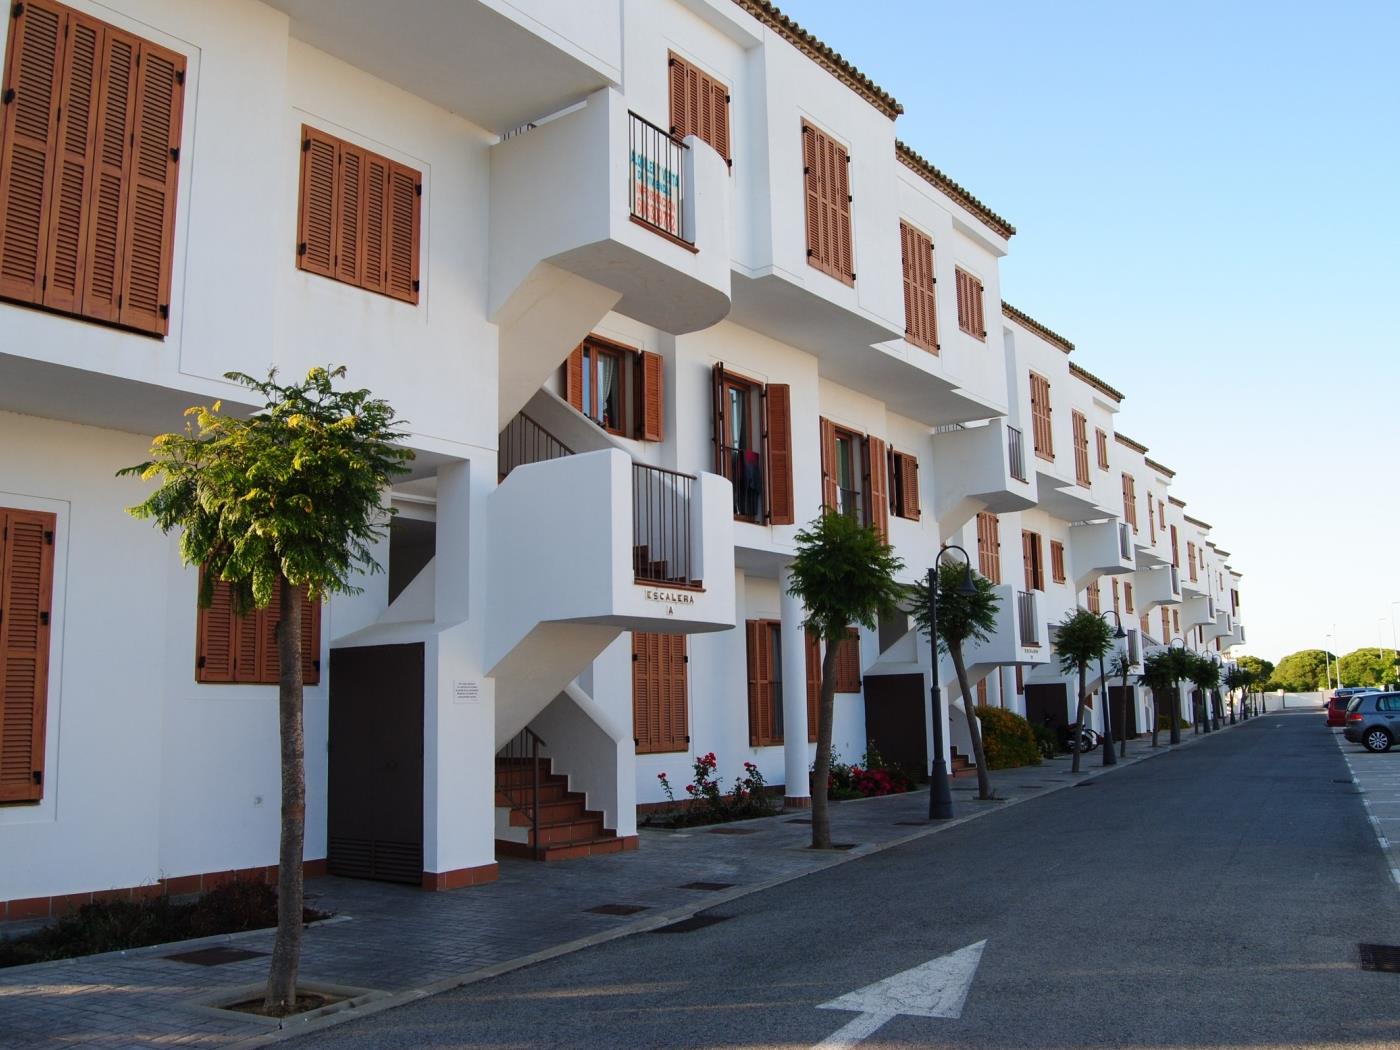 Ref B1. Two-bedroom apartment in Chiclana on the ground floor in Chiclana de la Frontera